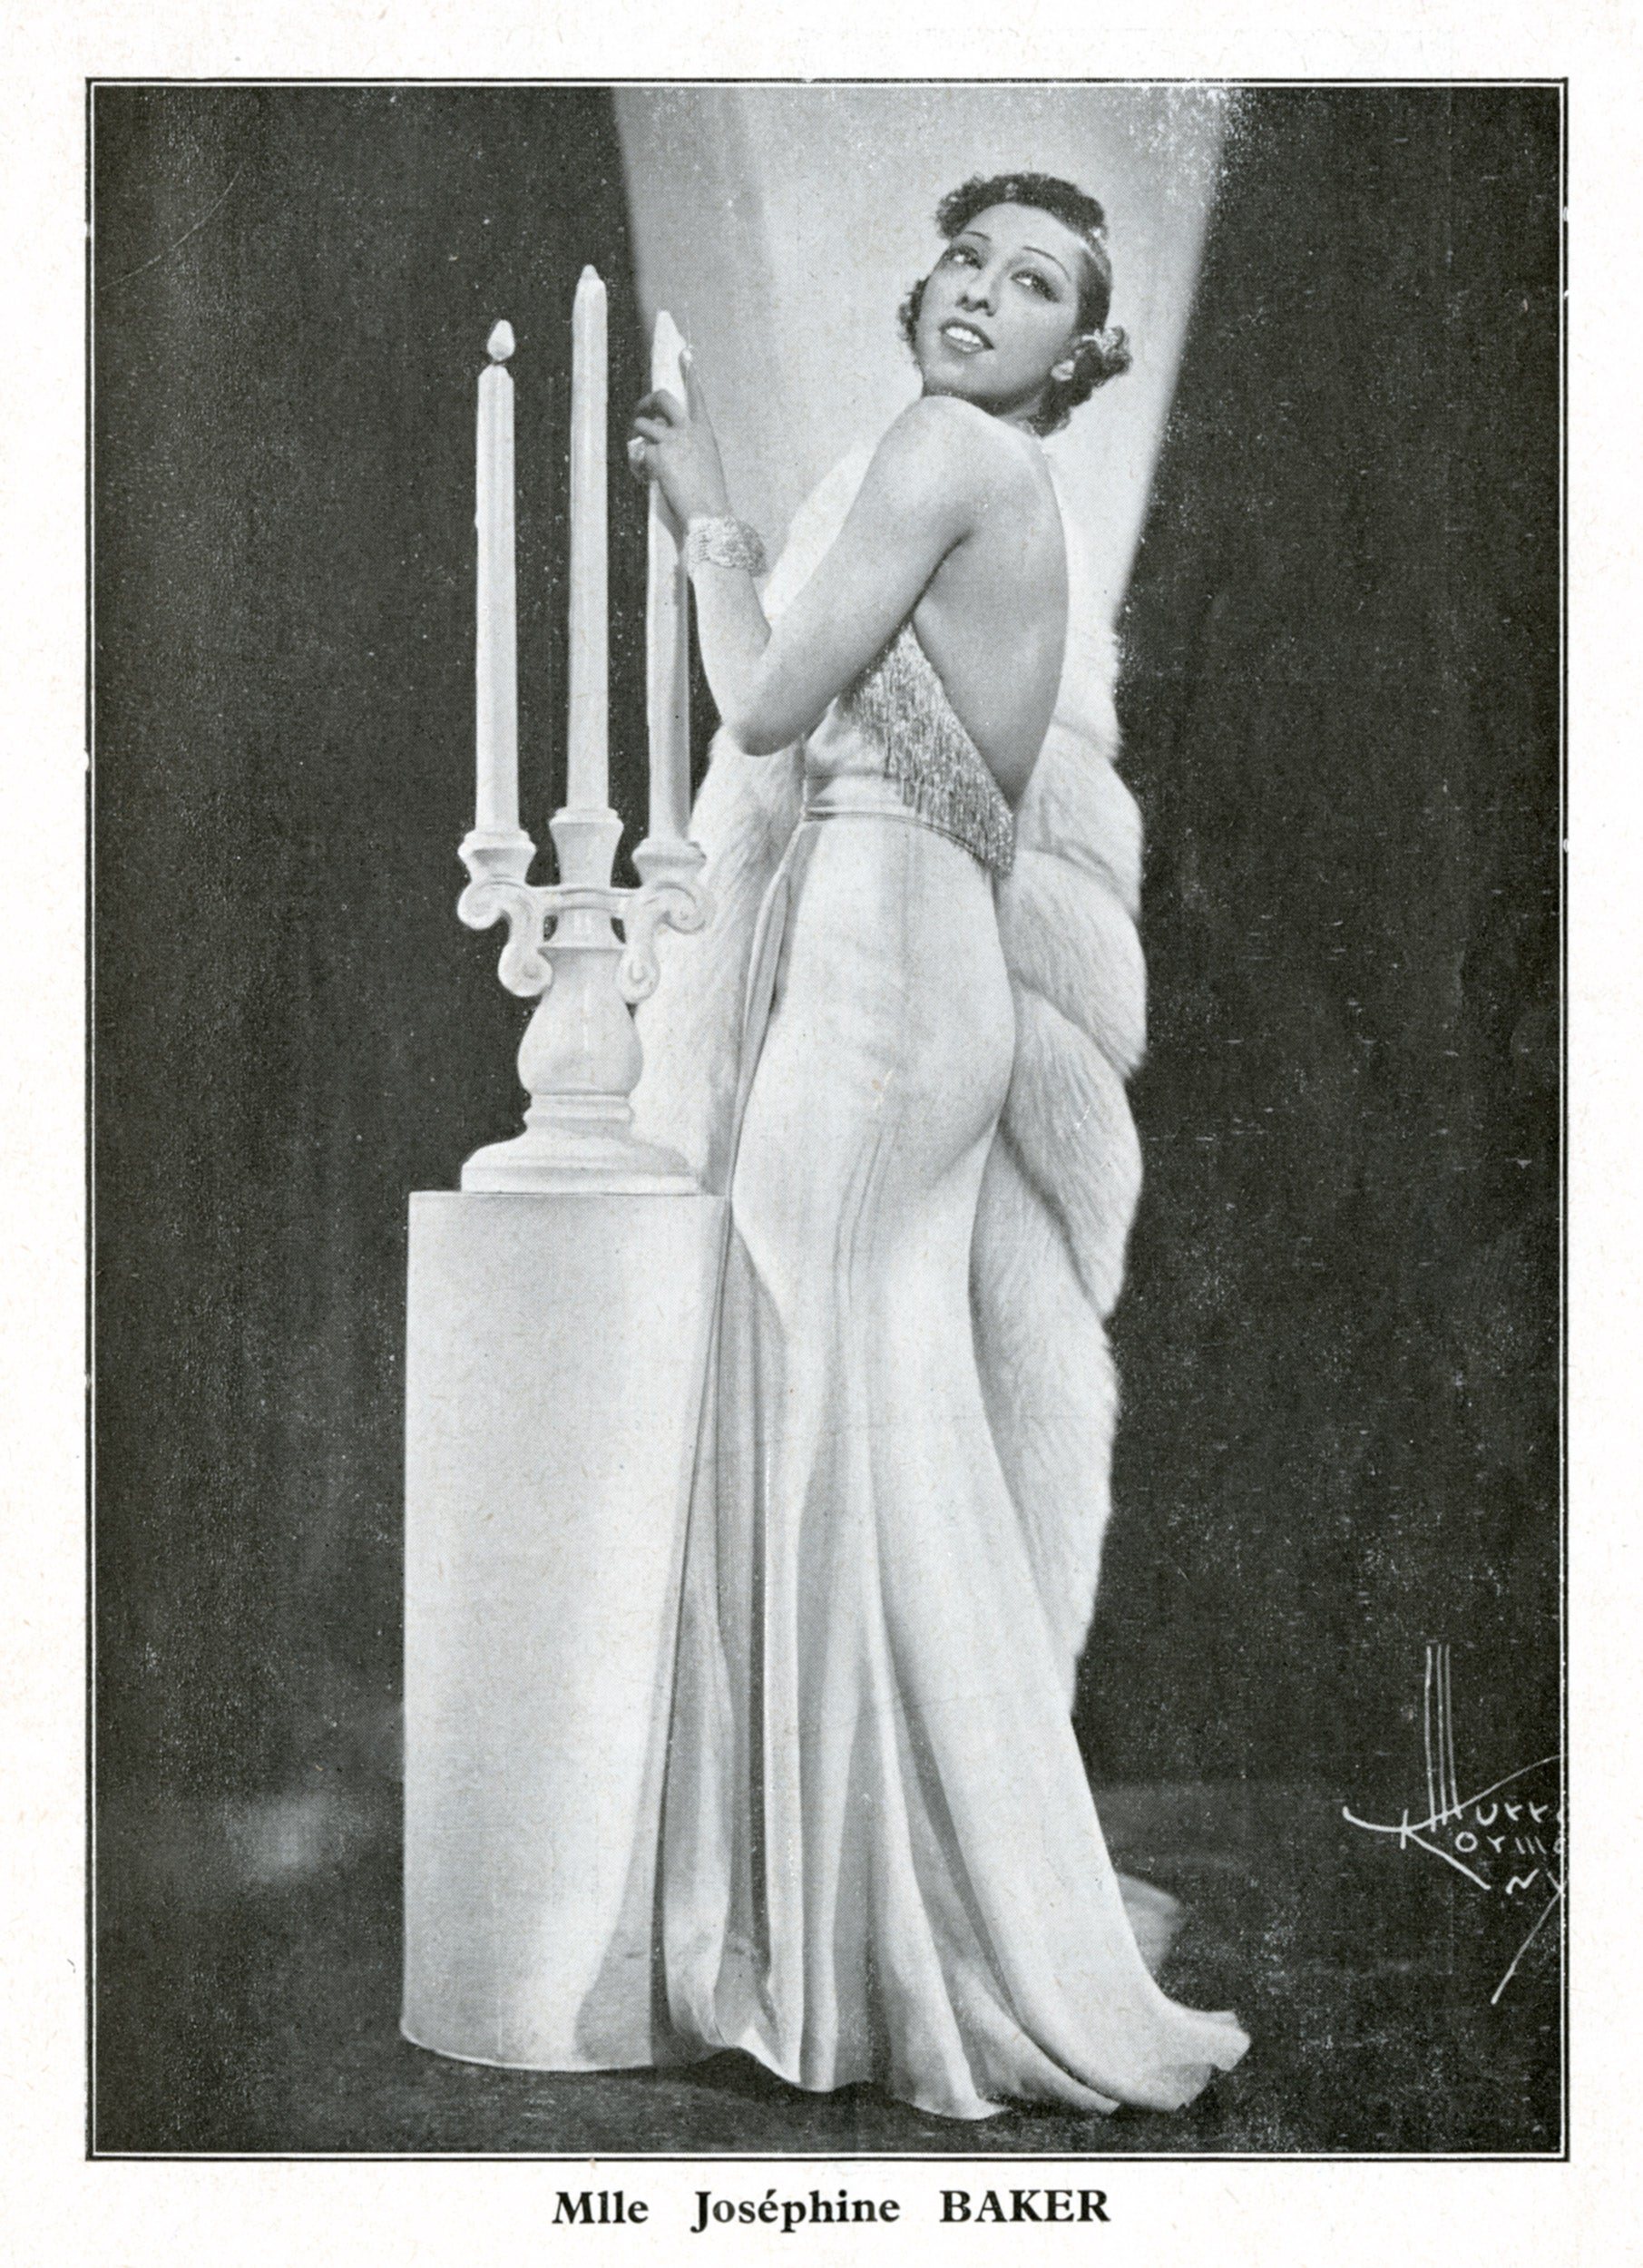 Josephine Baker became an international sensation as a singer and dancer at the Folies Bergère cabaret in Paris.